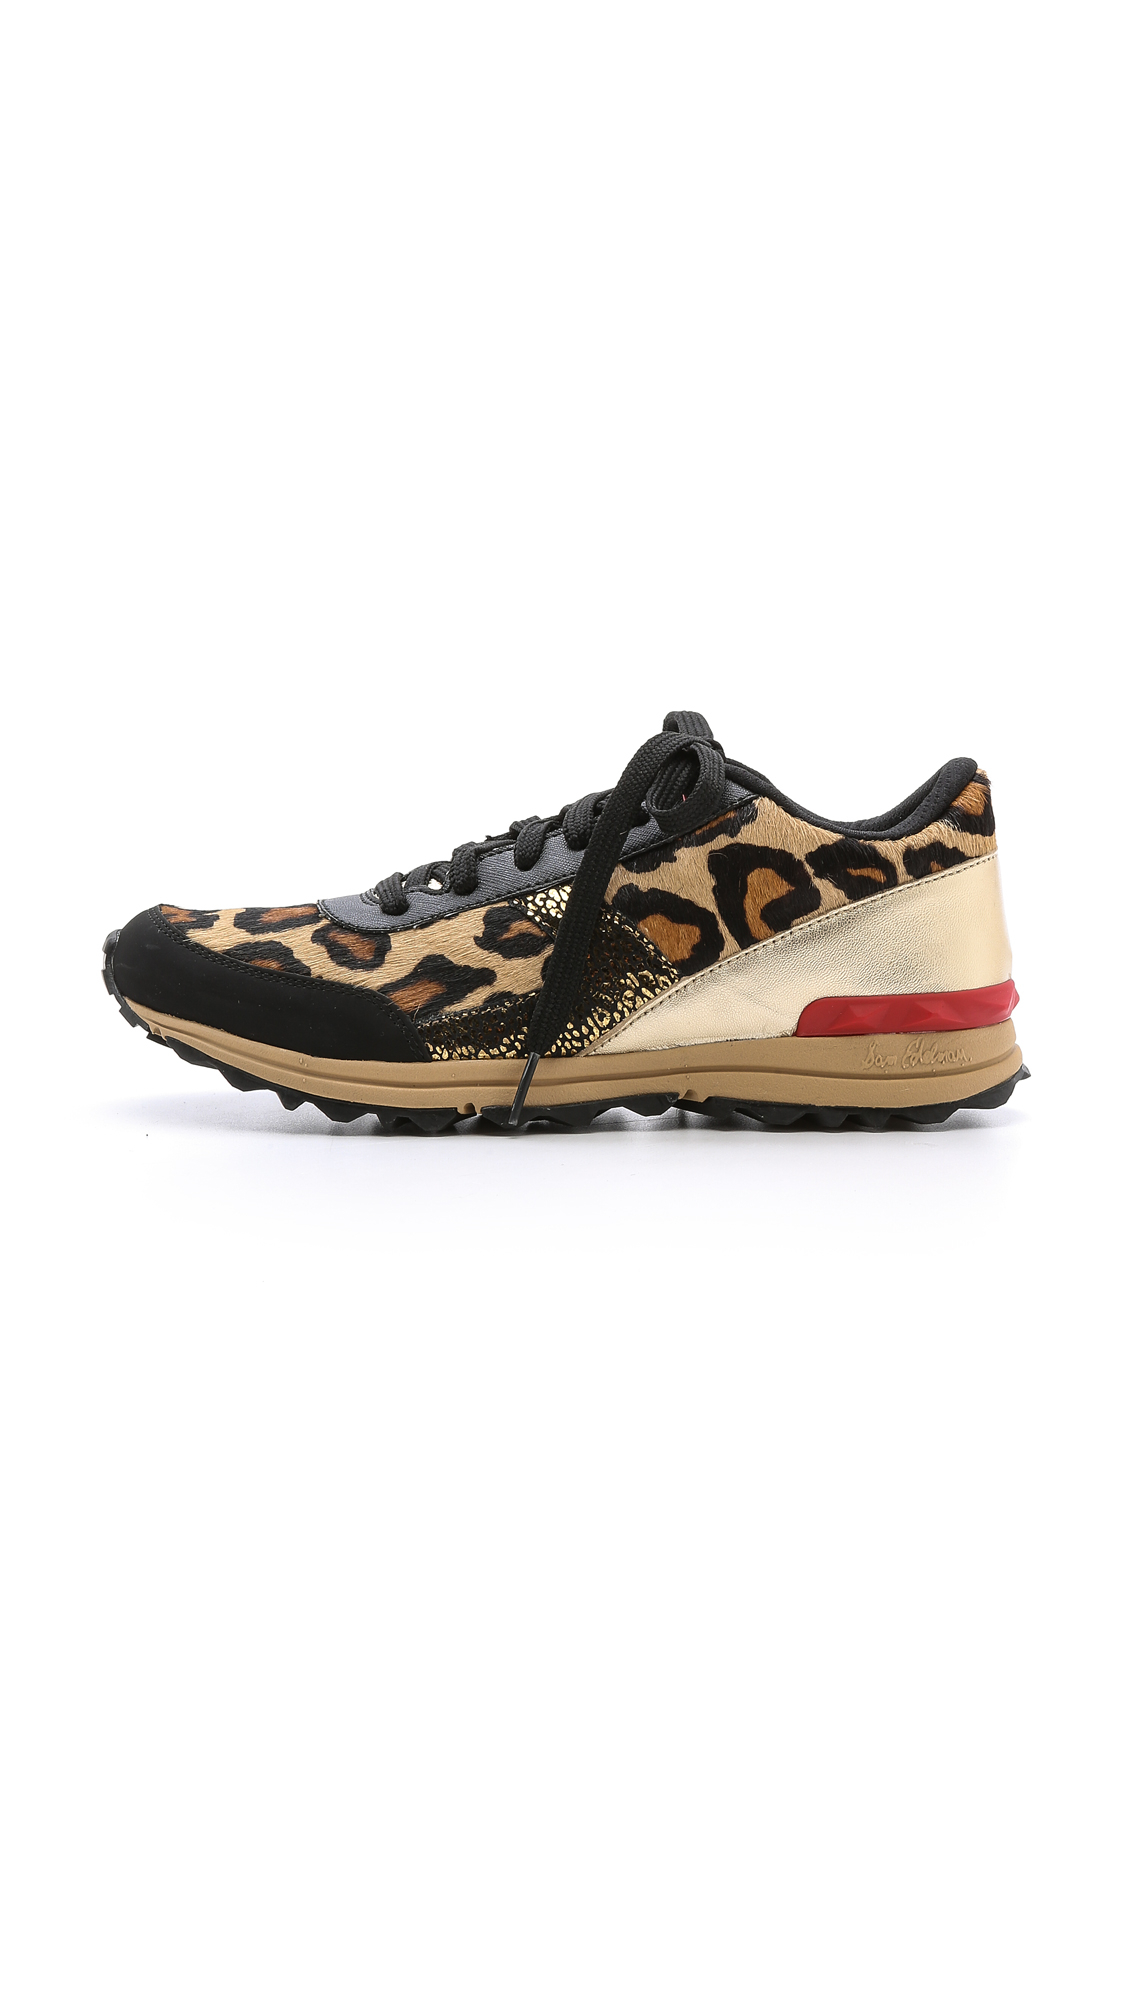 Lyst - Sam Edelman Dax Jogging Sneakers - Black/Gold Leopard